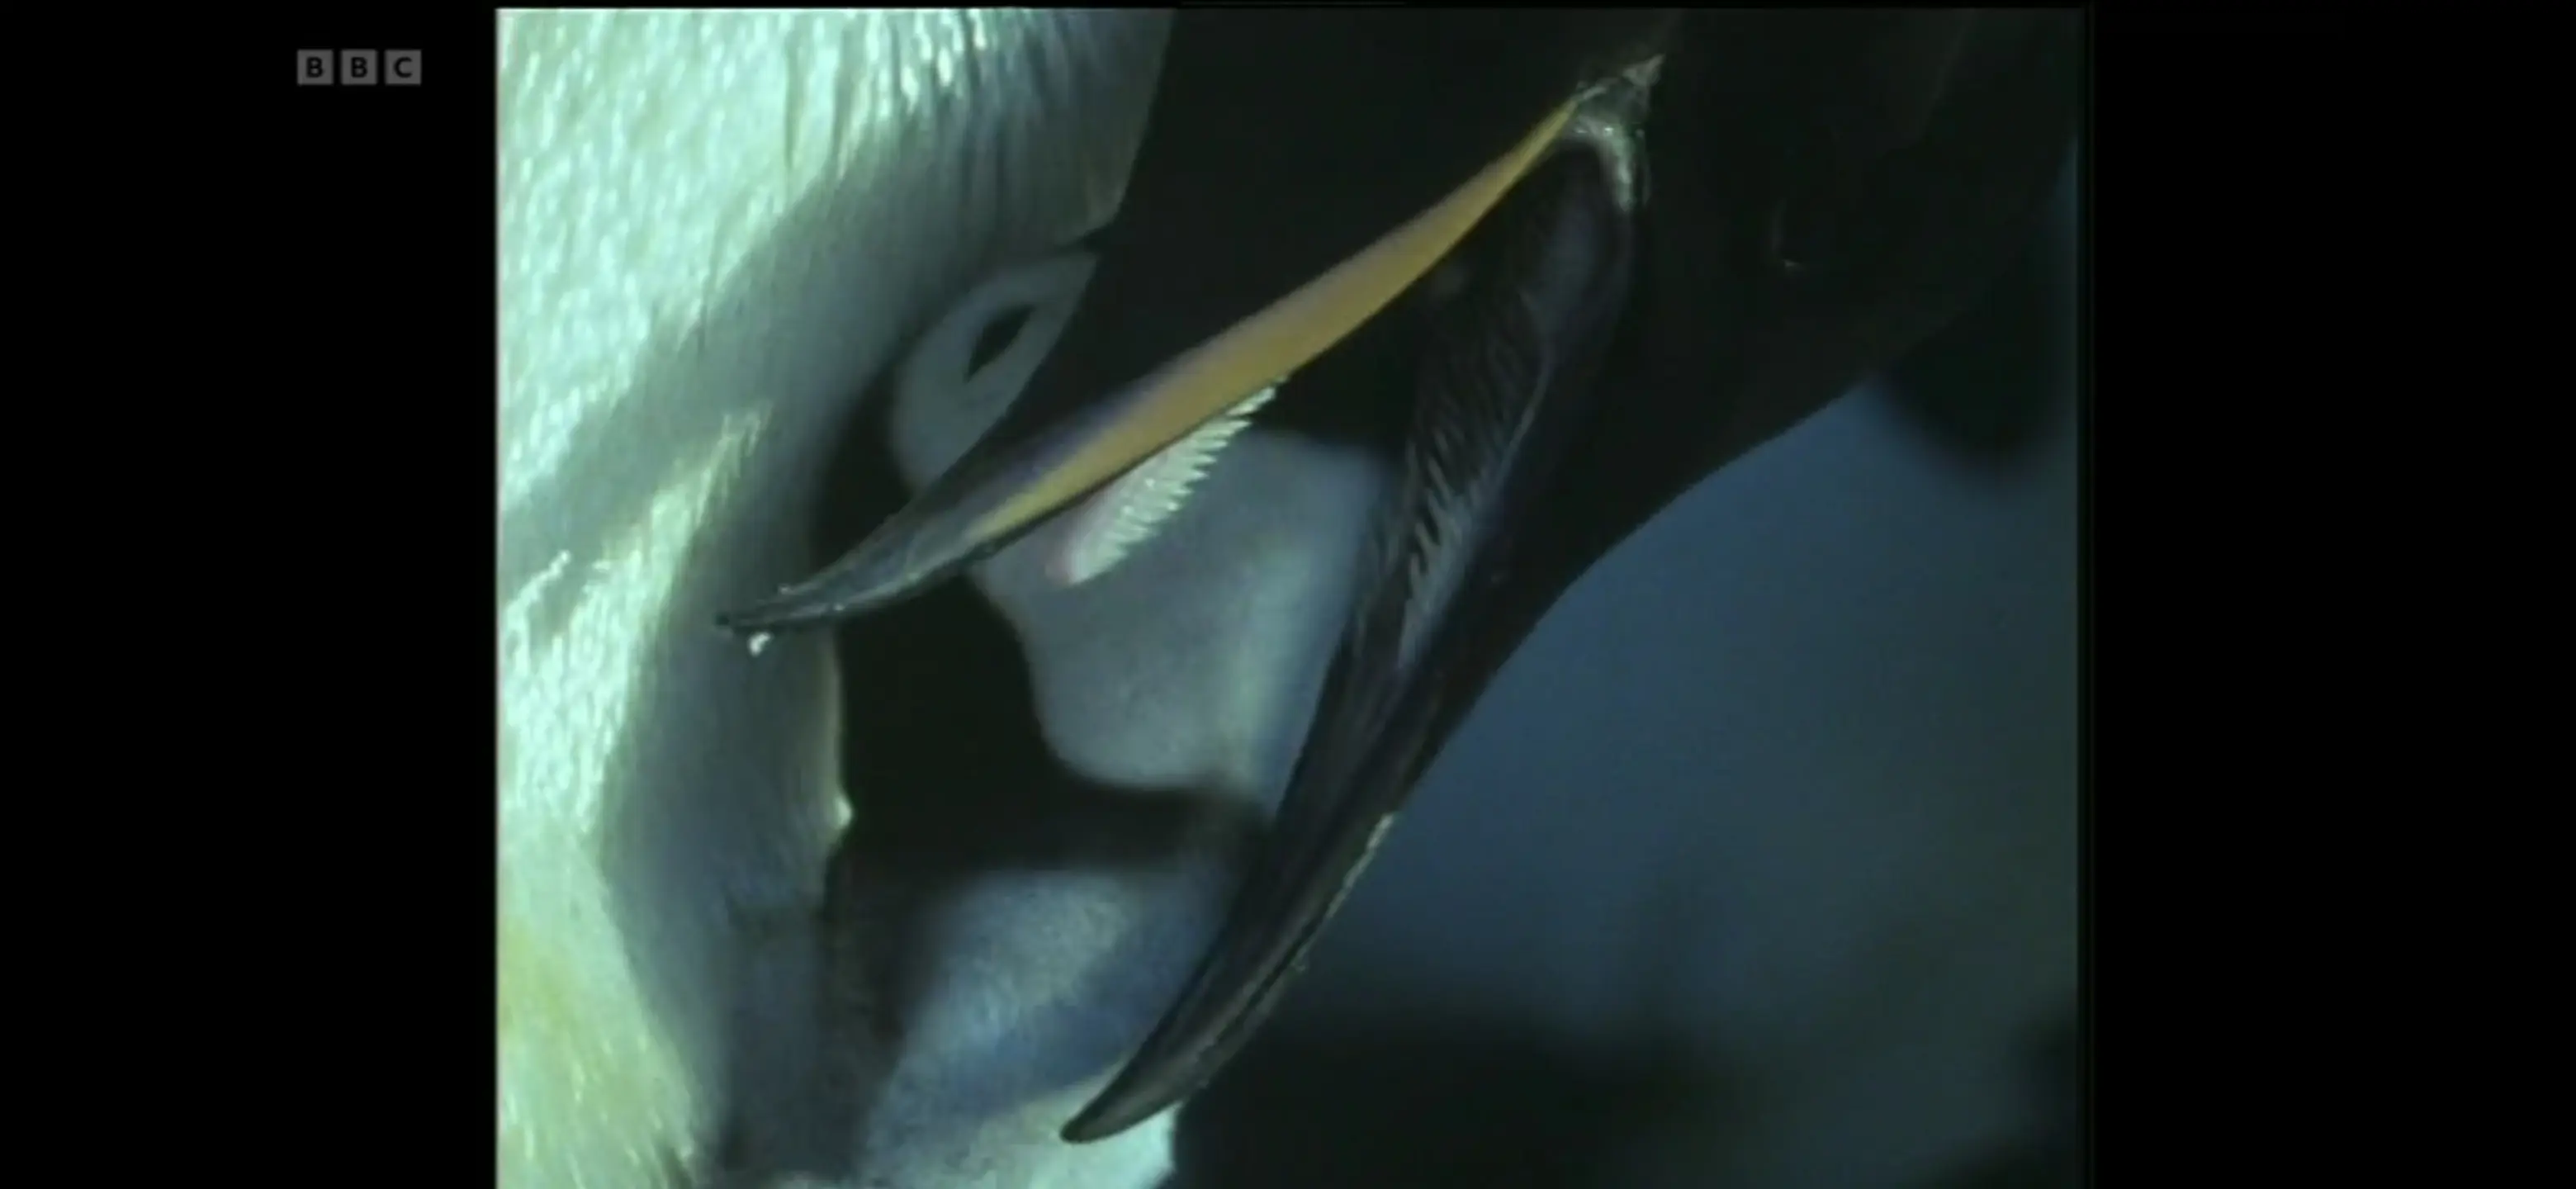 Emperor penguin (Aptenodytes forsteri) as shown in Life in the Freezer - The Big Freeze